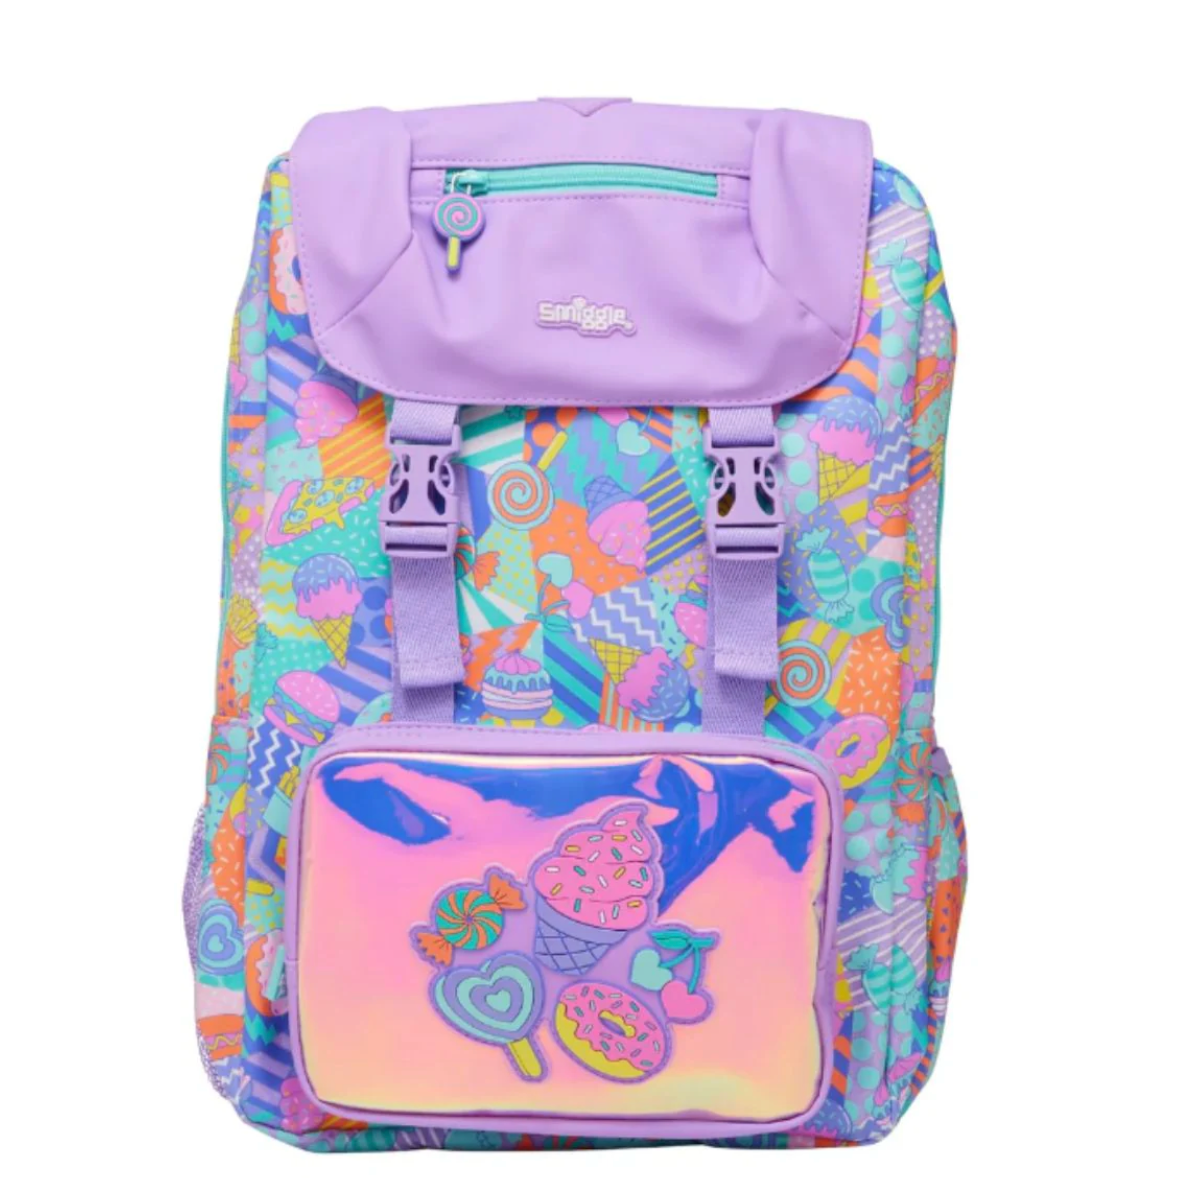 Smiggle Foldover Backpack - Lilac